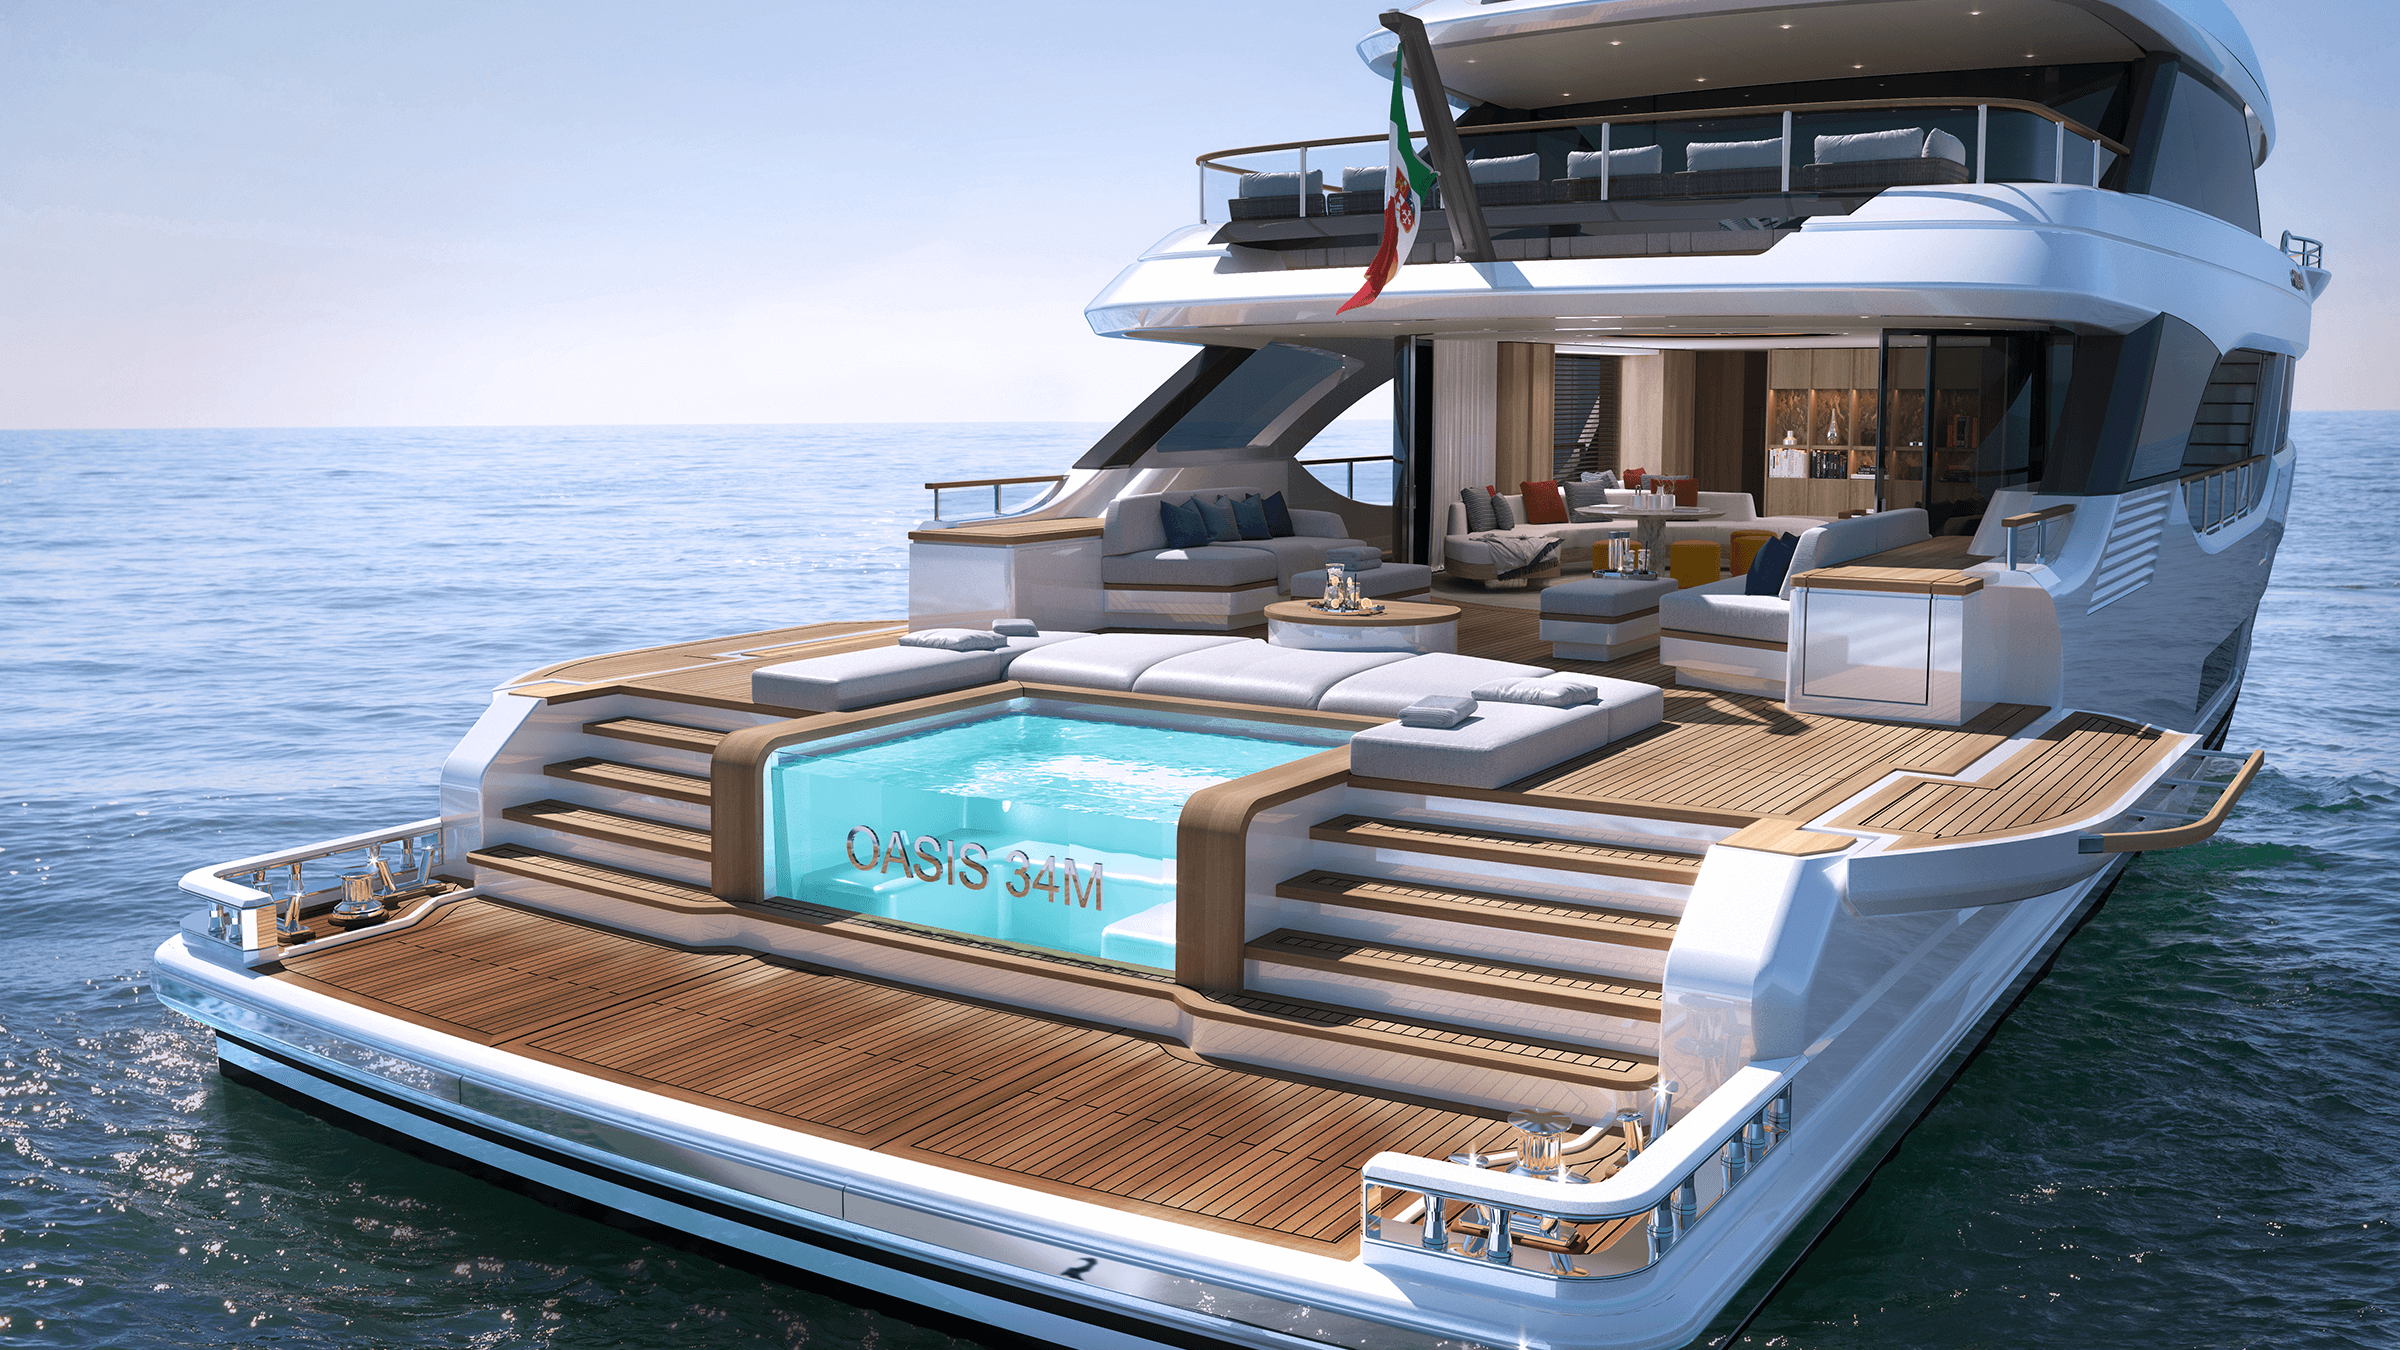 Oasis 34m yacht